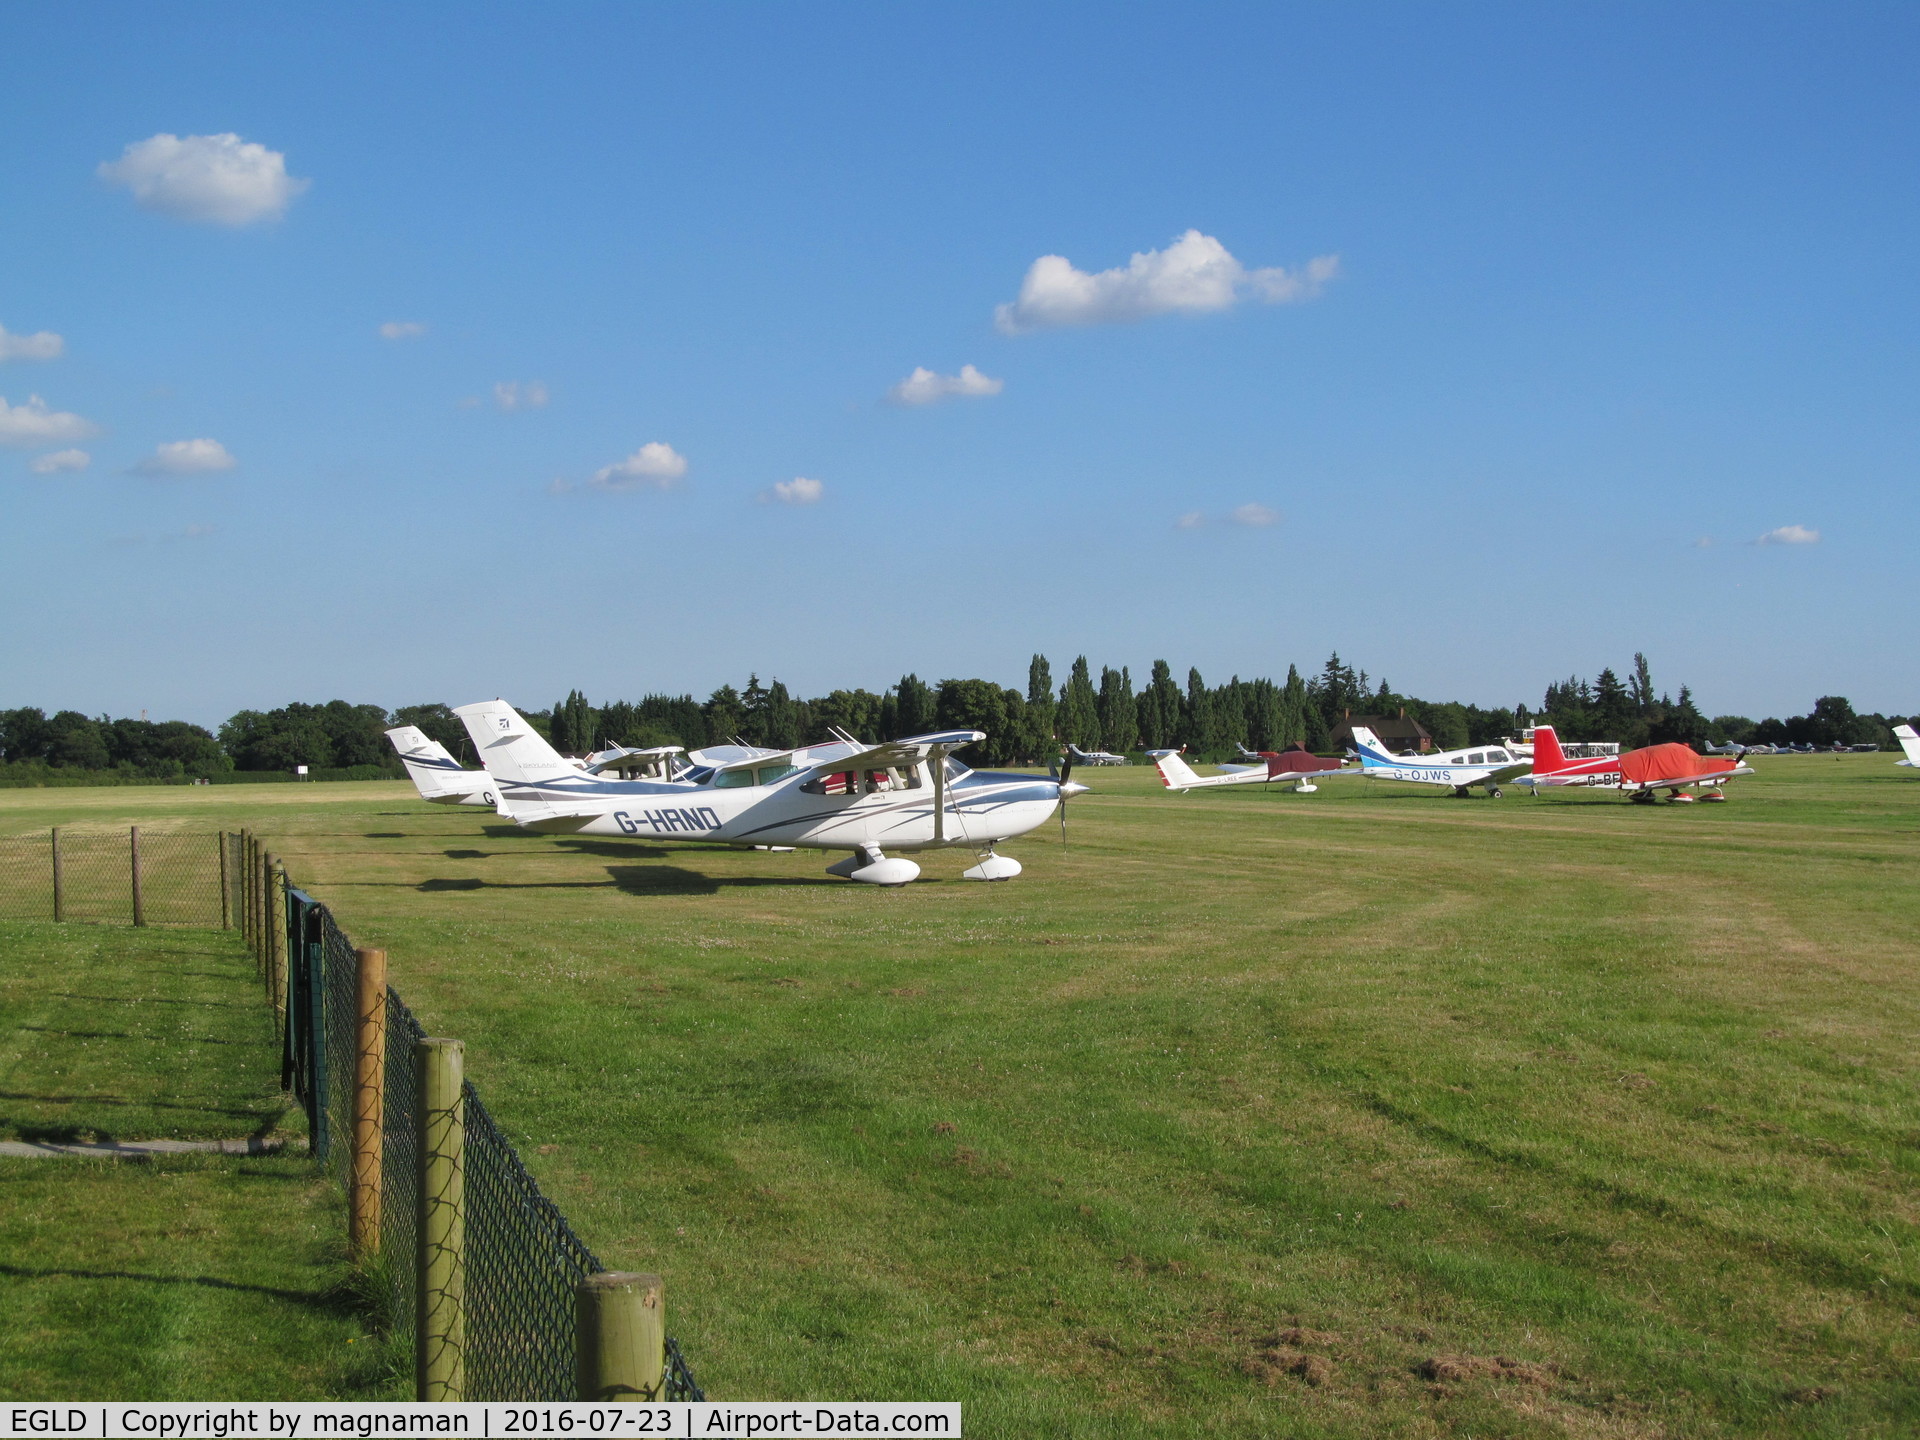 Denham Aerodrome Airport, Gerrards Cross, England United Kingdom (EGLD) - lovely gras airfield